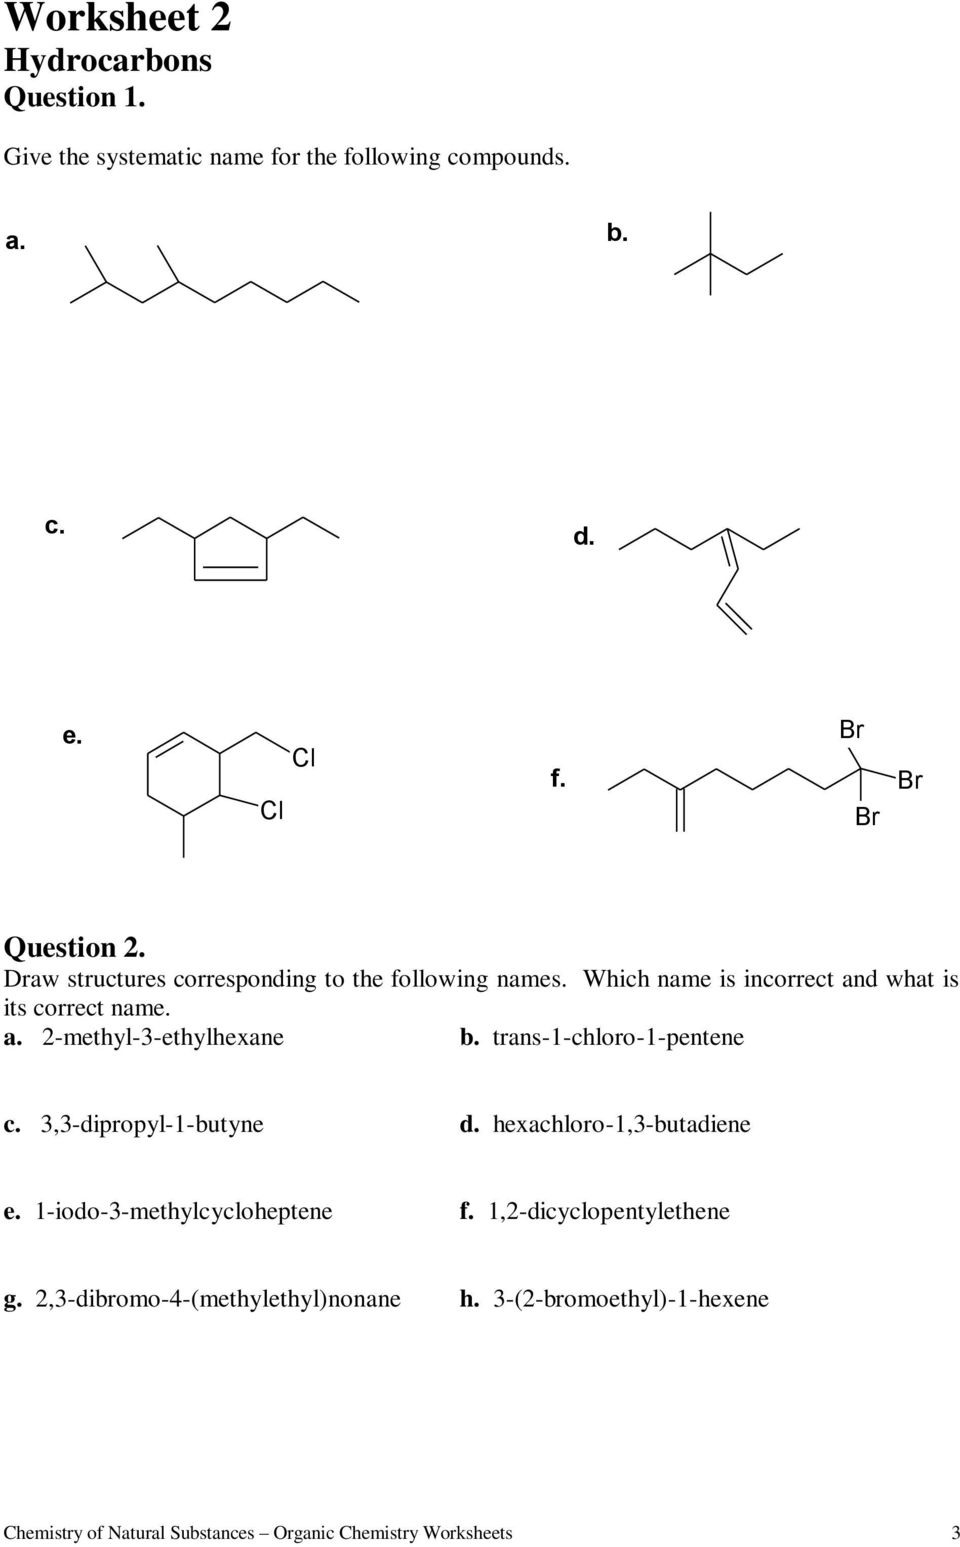 worksheets-for-organic-chemistry-pdf-db-excel